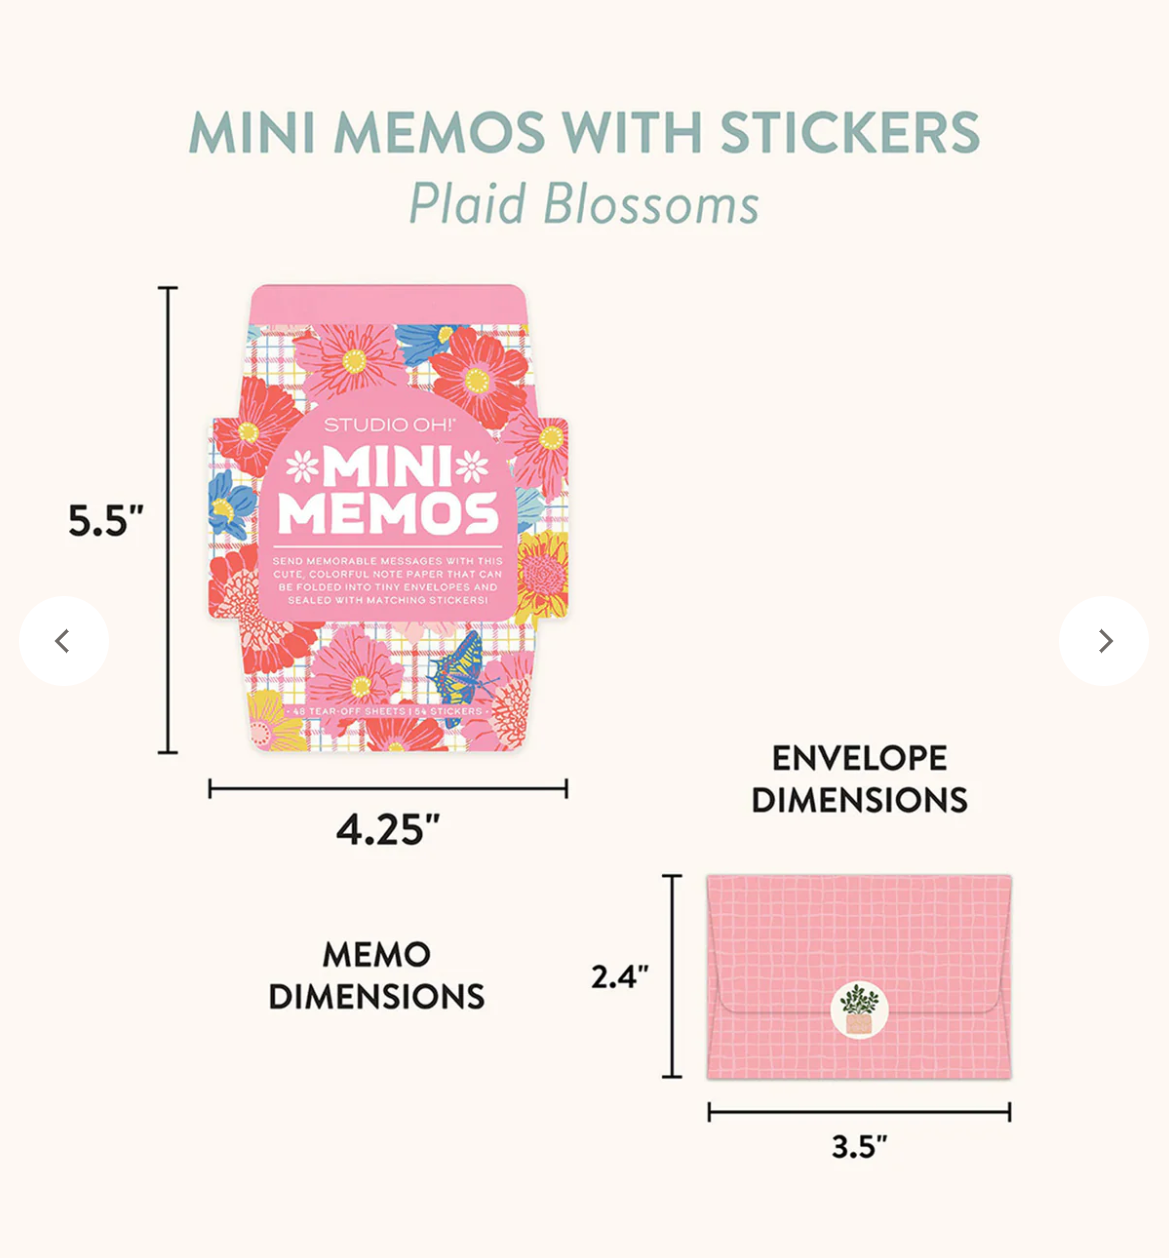 Mini Memos with Stickers